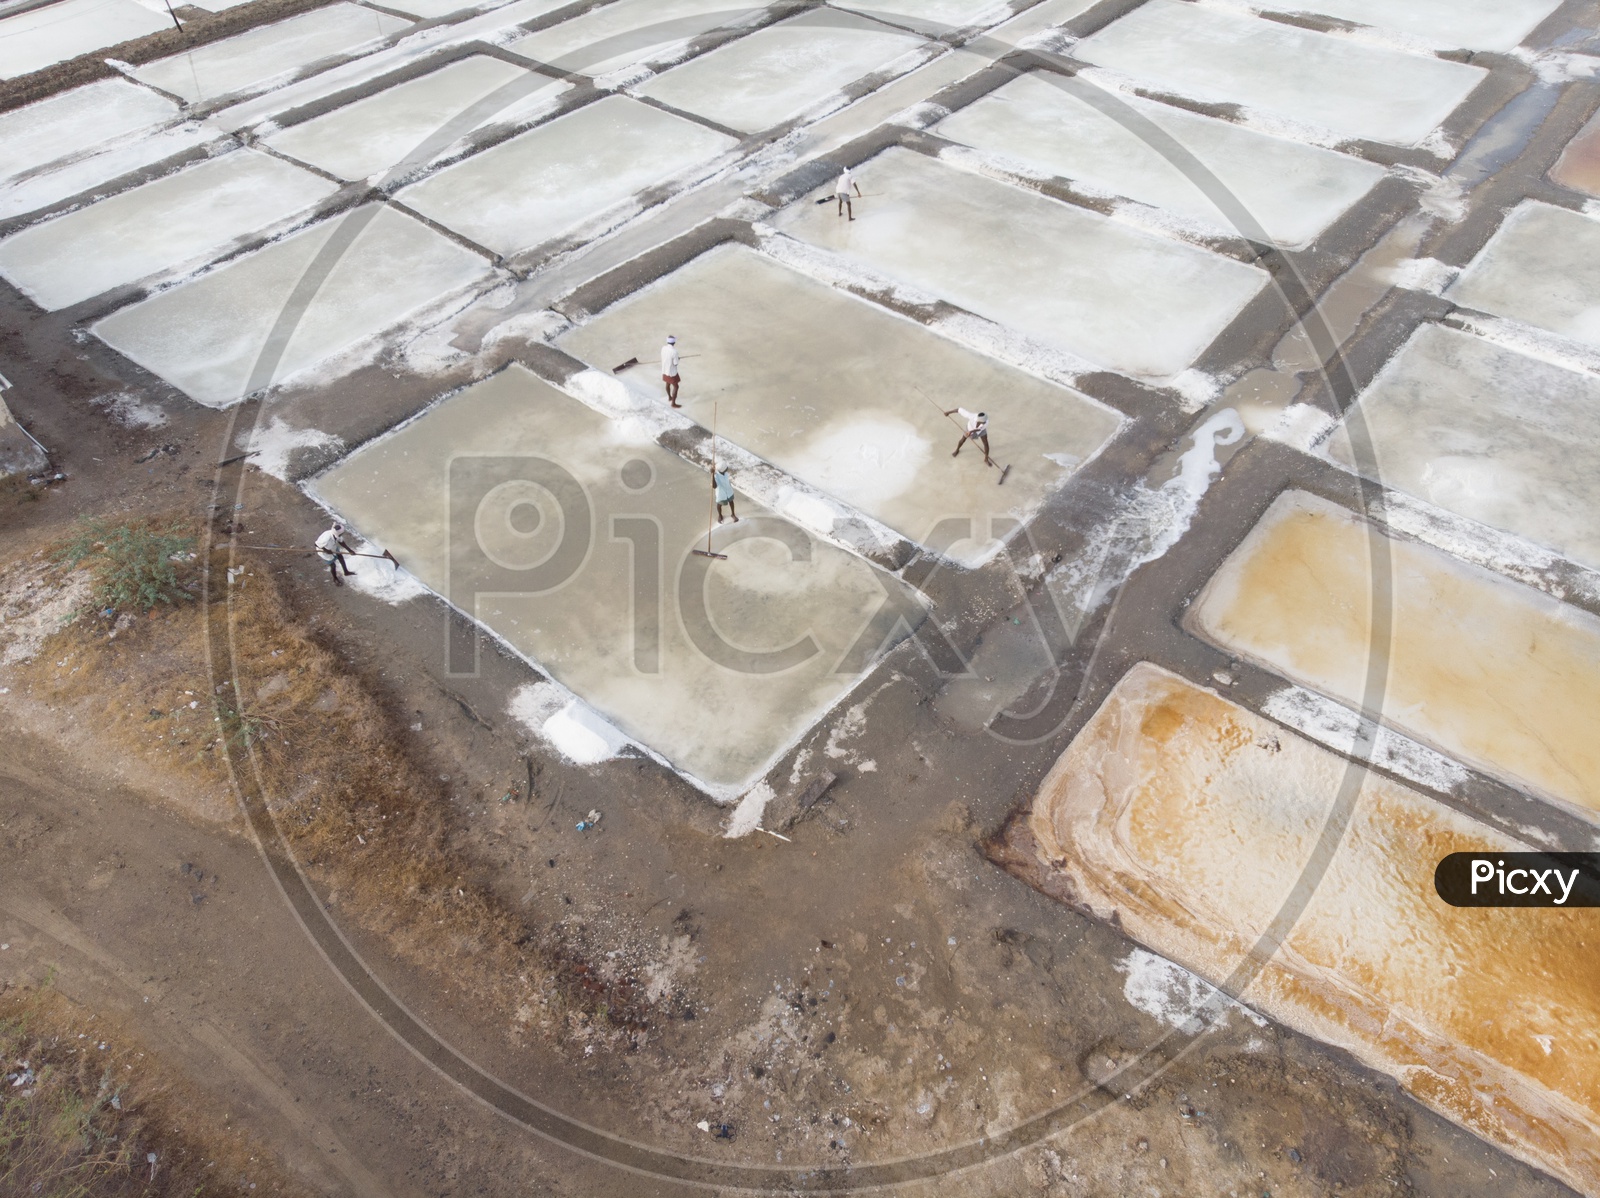 Aerial View Of Salt Making or Harvesting Beds or Pans